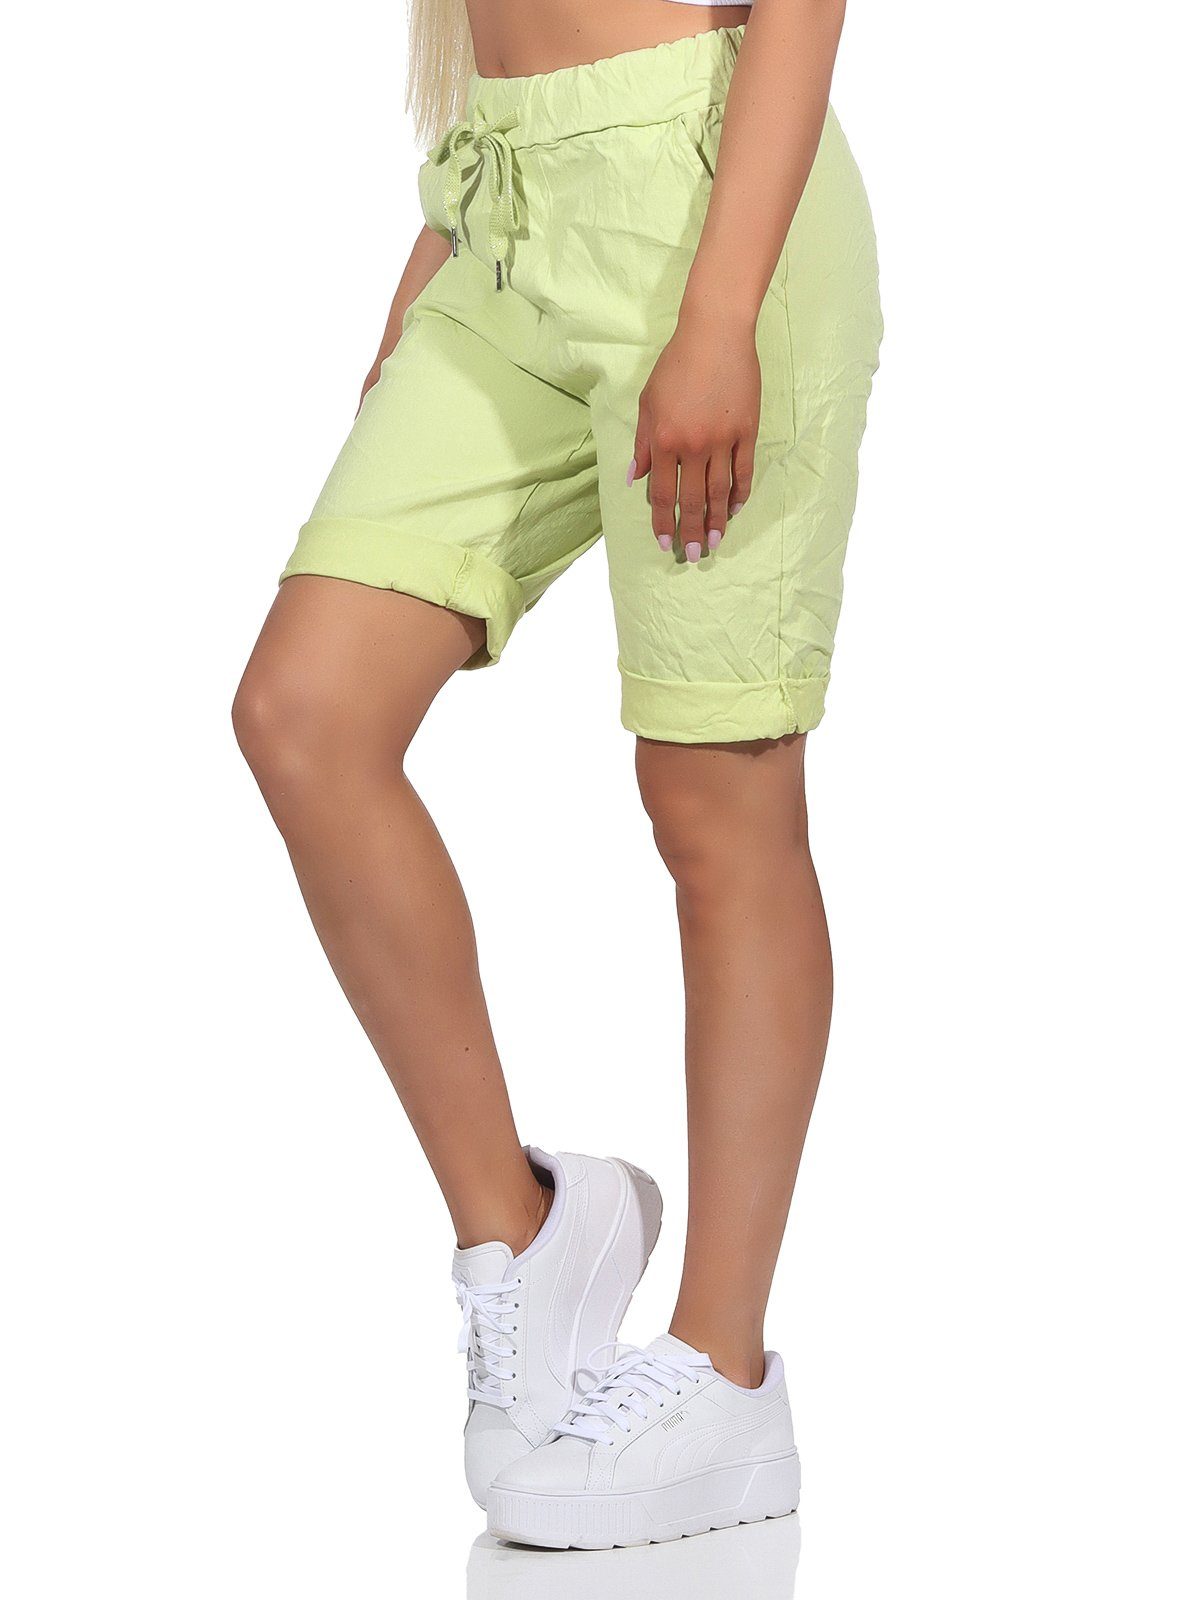 Shorts Damen Aurela Chinoshorts Sommerhose Kurze Bermuda Kiwi Chino Jeans Damenmode